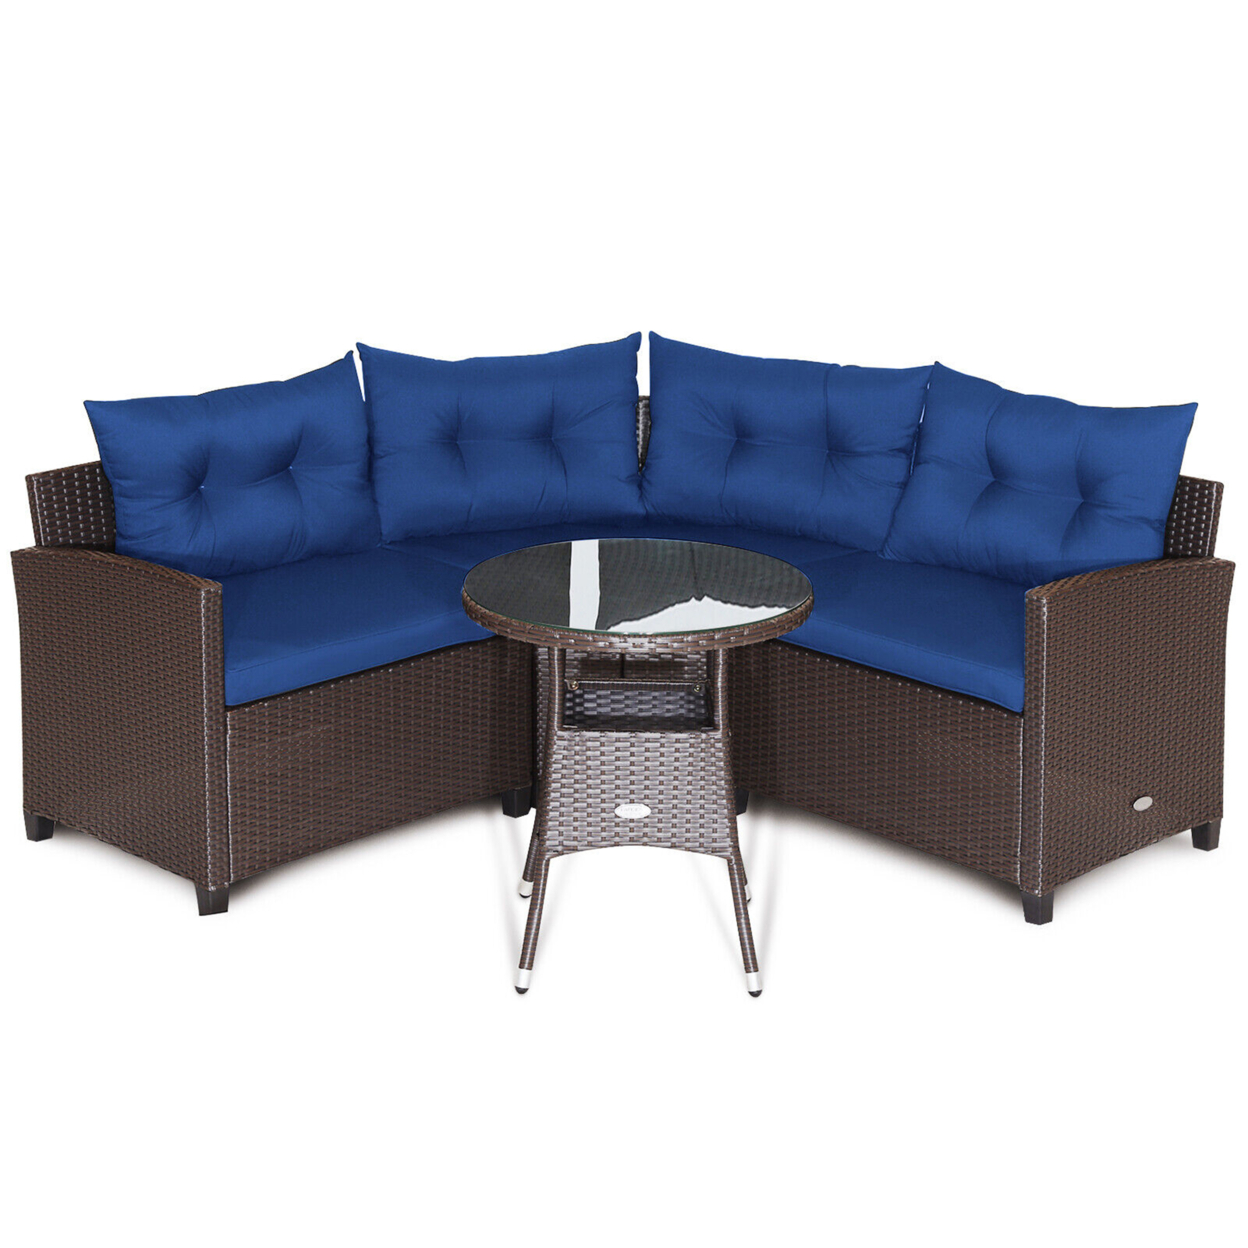 4PCS Wicker Patio Sofa Set Rattan Outdoor Furniture Set W/ Navy Cushions